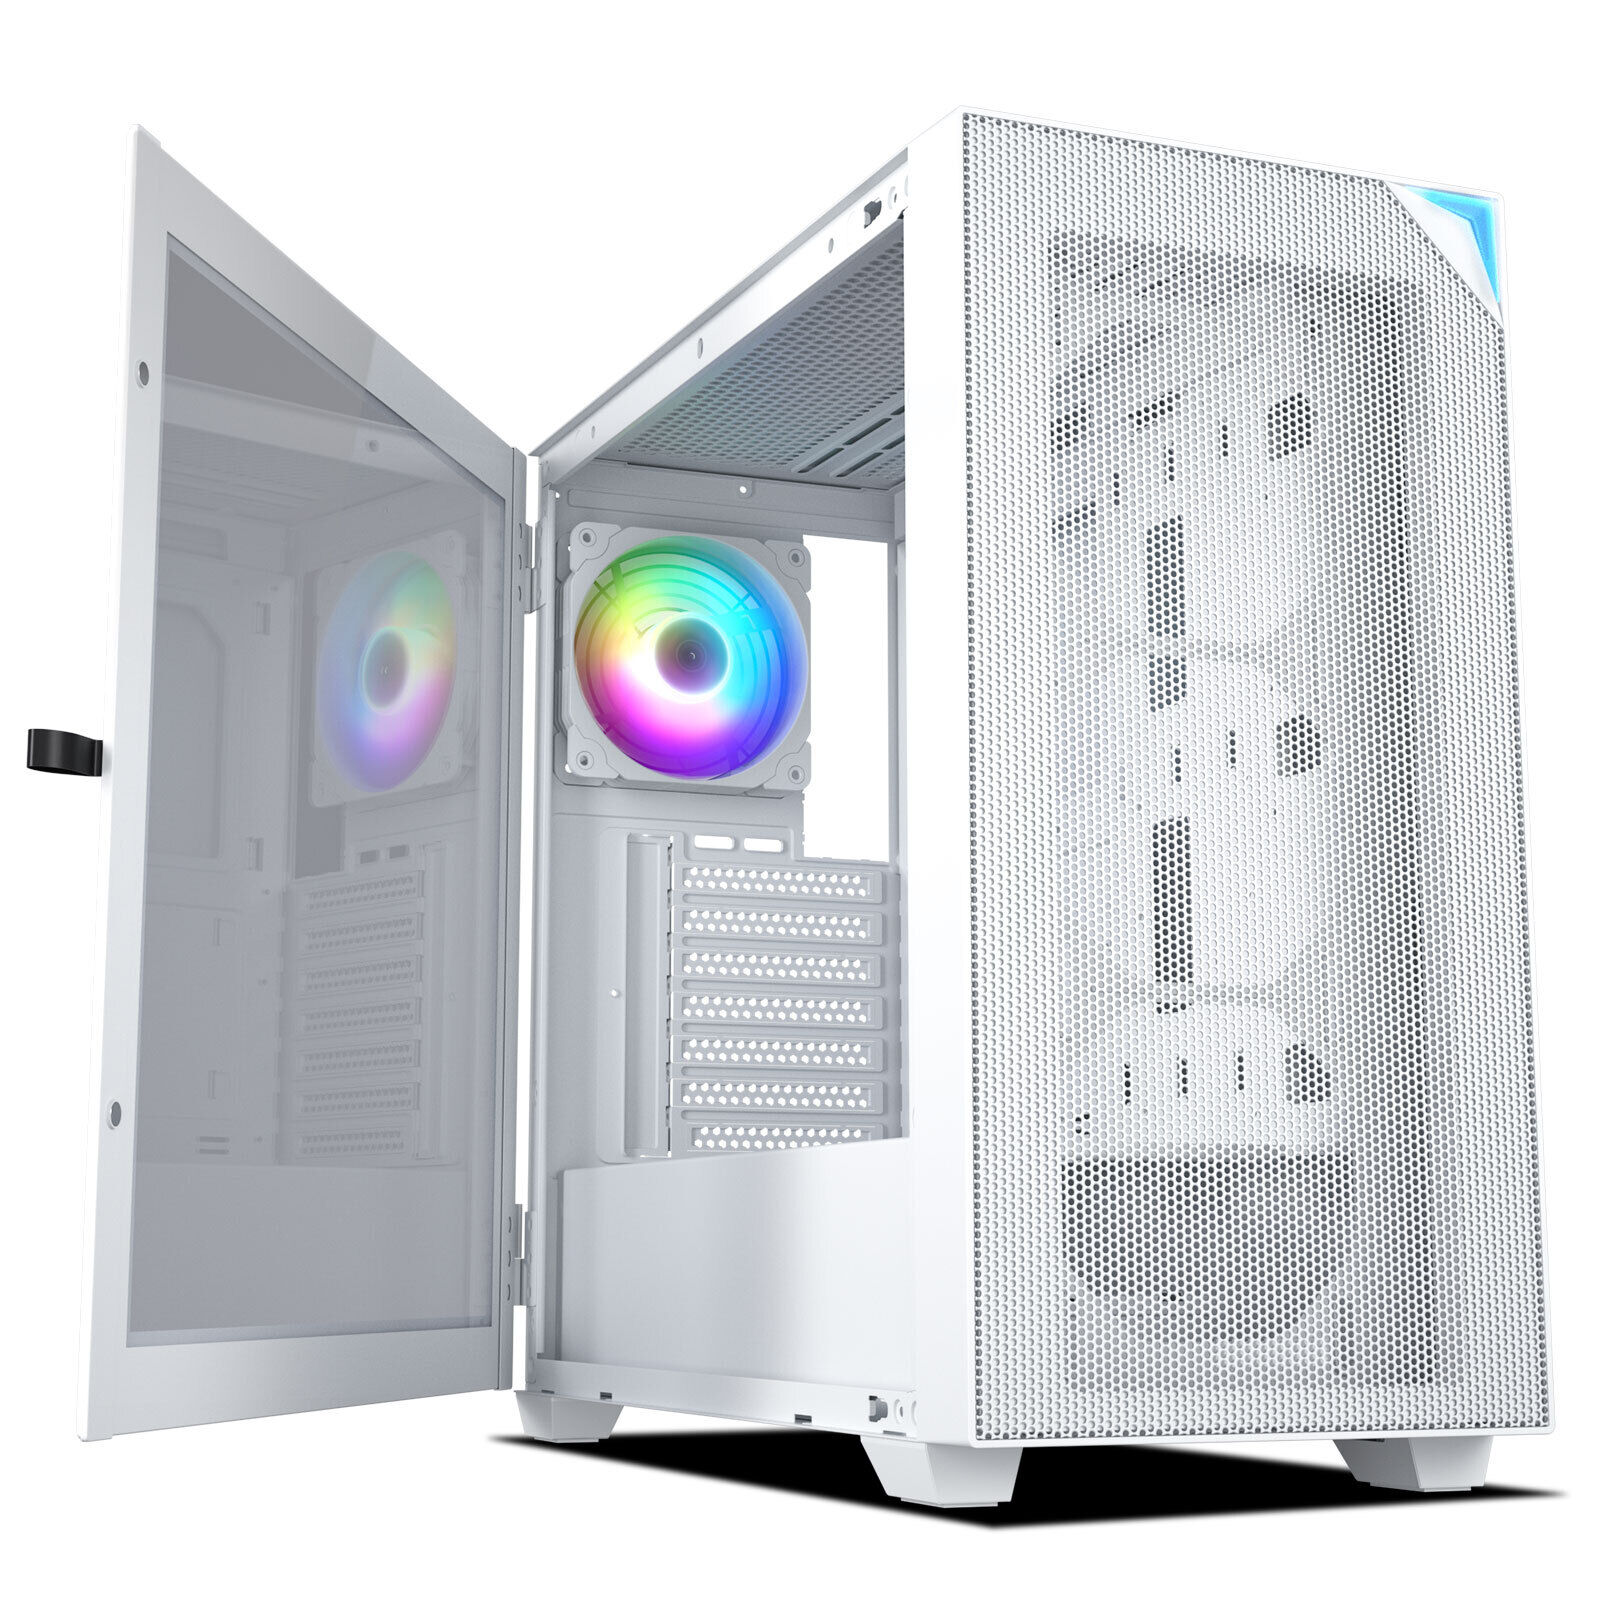 Vetroo AL800 White Mesh E-ATX Full Tower PC Gaming Case 4mm Tempered Glass